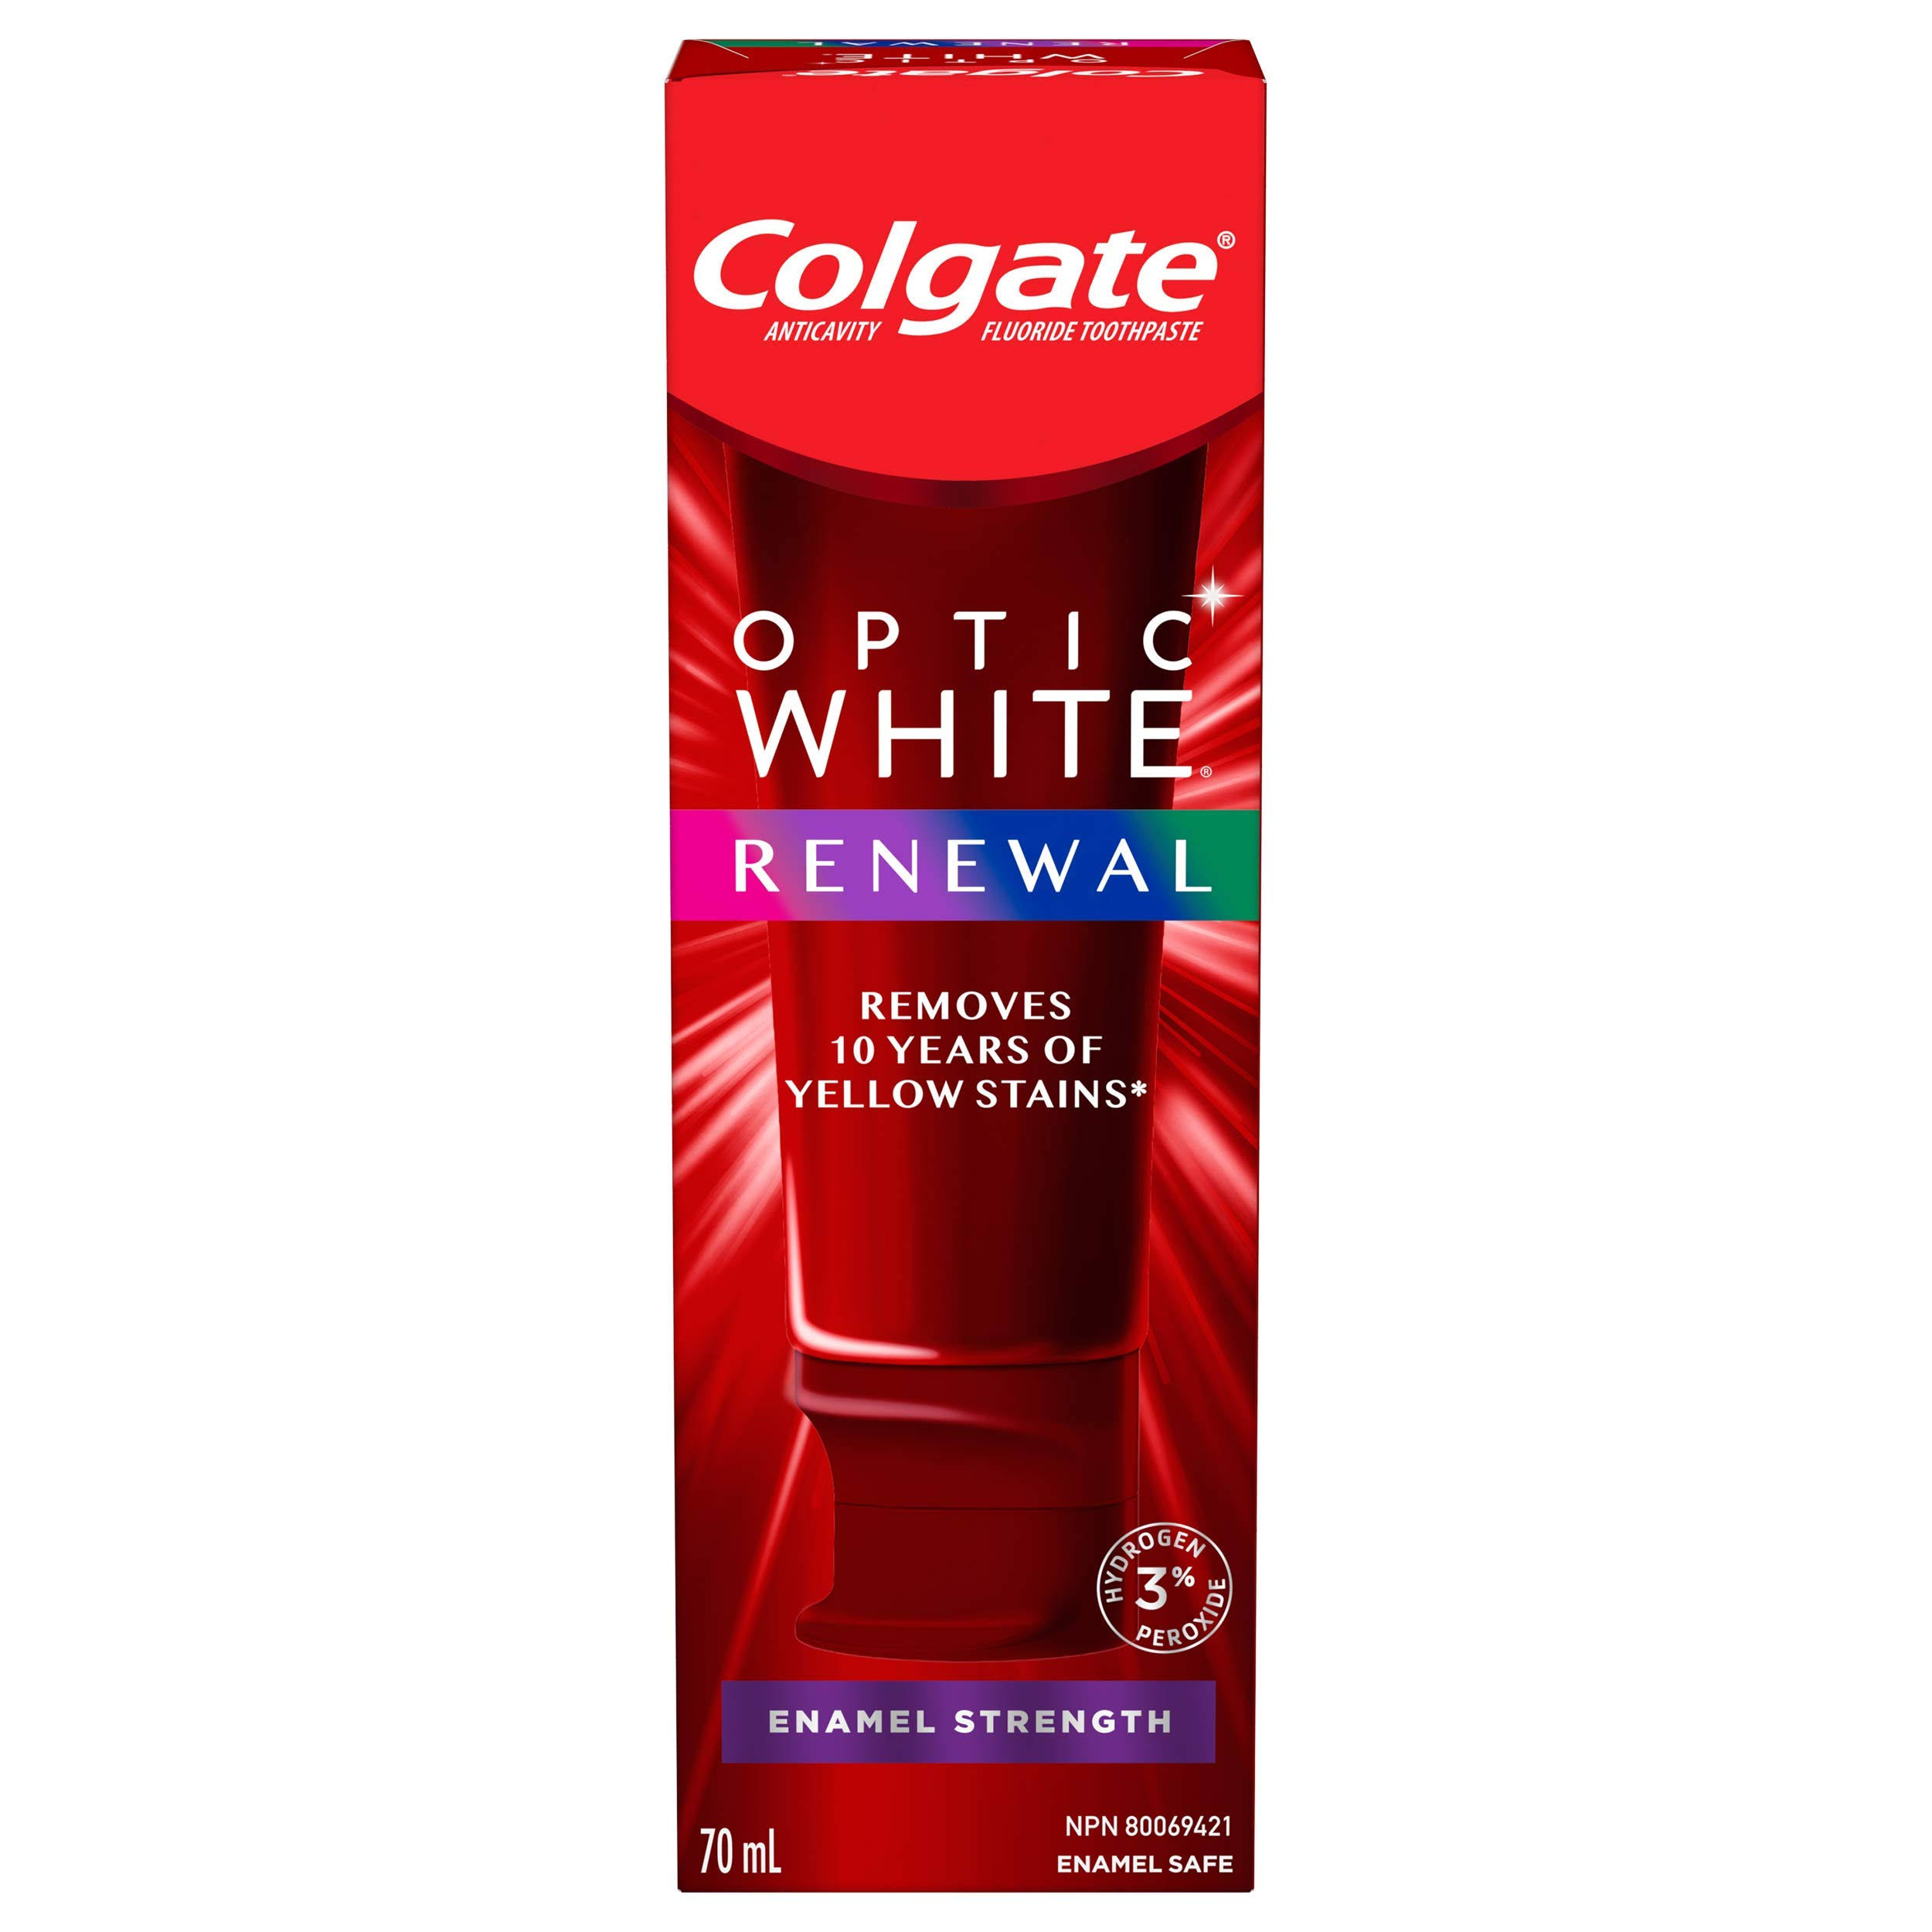 Colgate Optic White Renewal Enamel Strength Teeth Whitening Toothpaste - 70 Ml